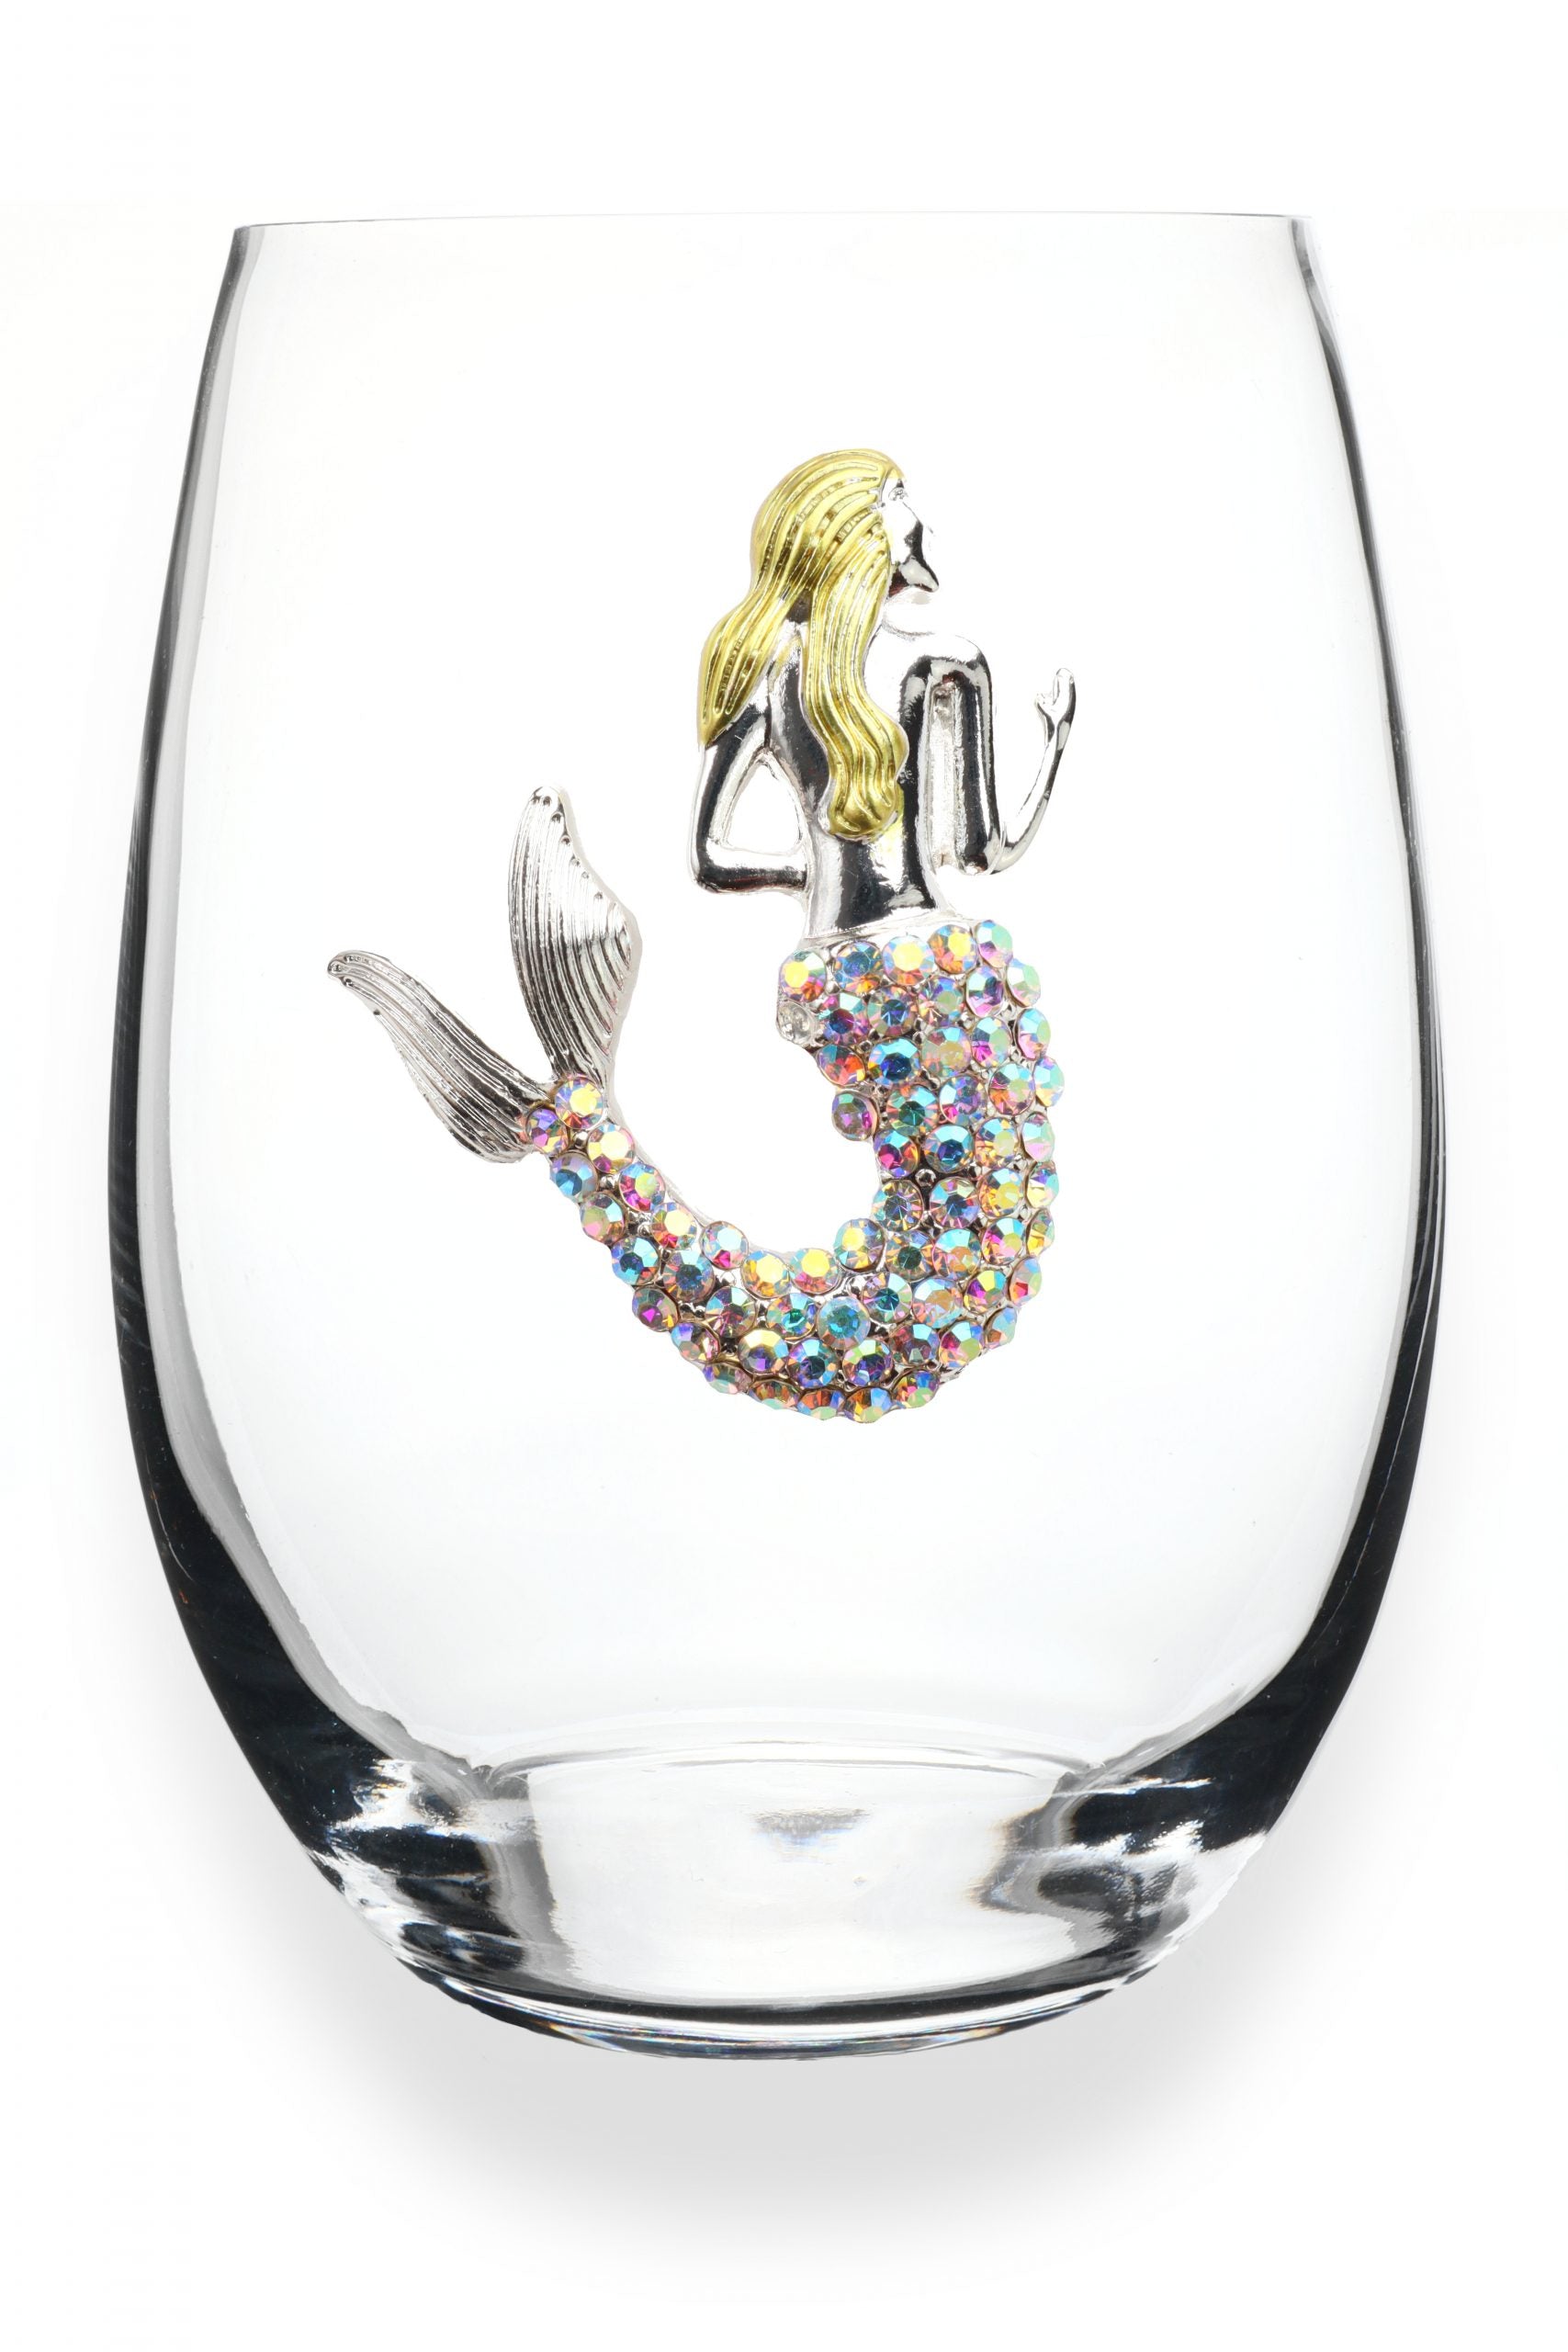 Aurora Borealis Mermaid Jeweled Stemless Wine Glass